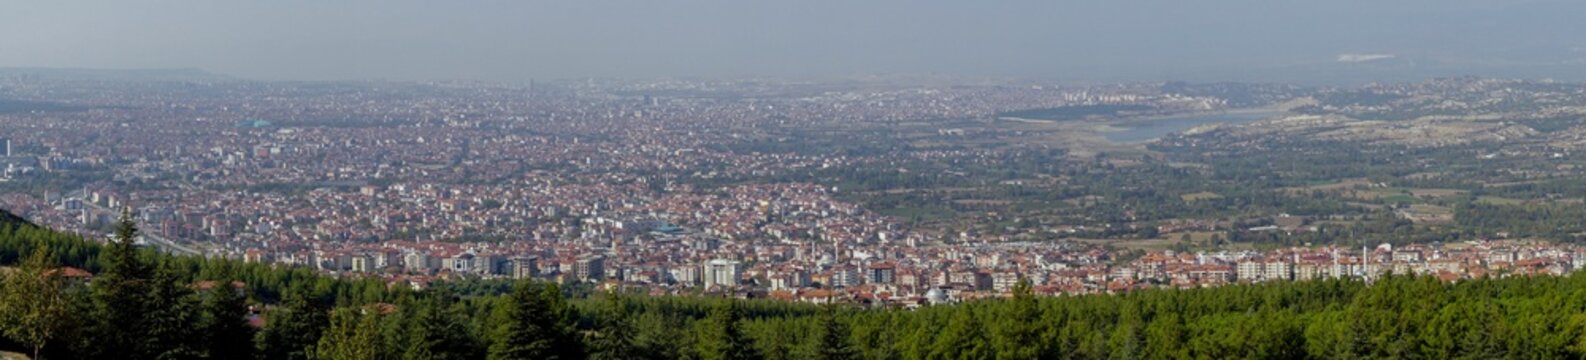 Panoramic view of Denizli city in a daylight